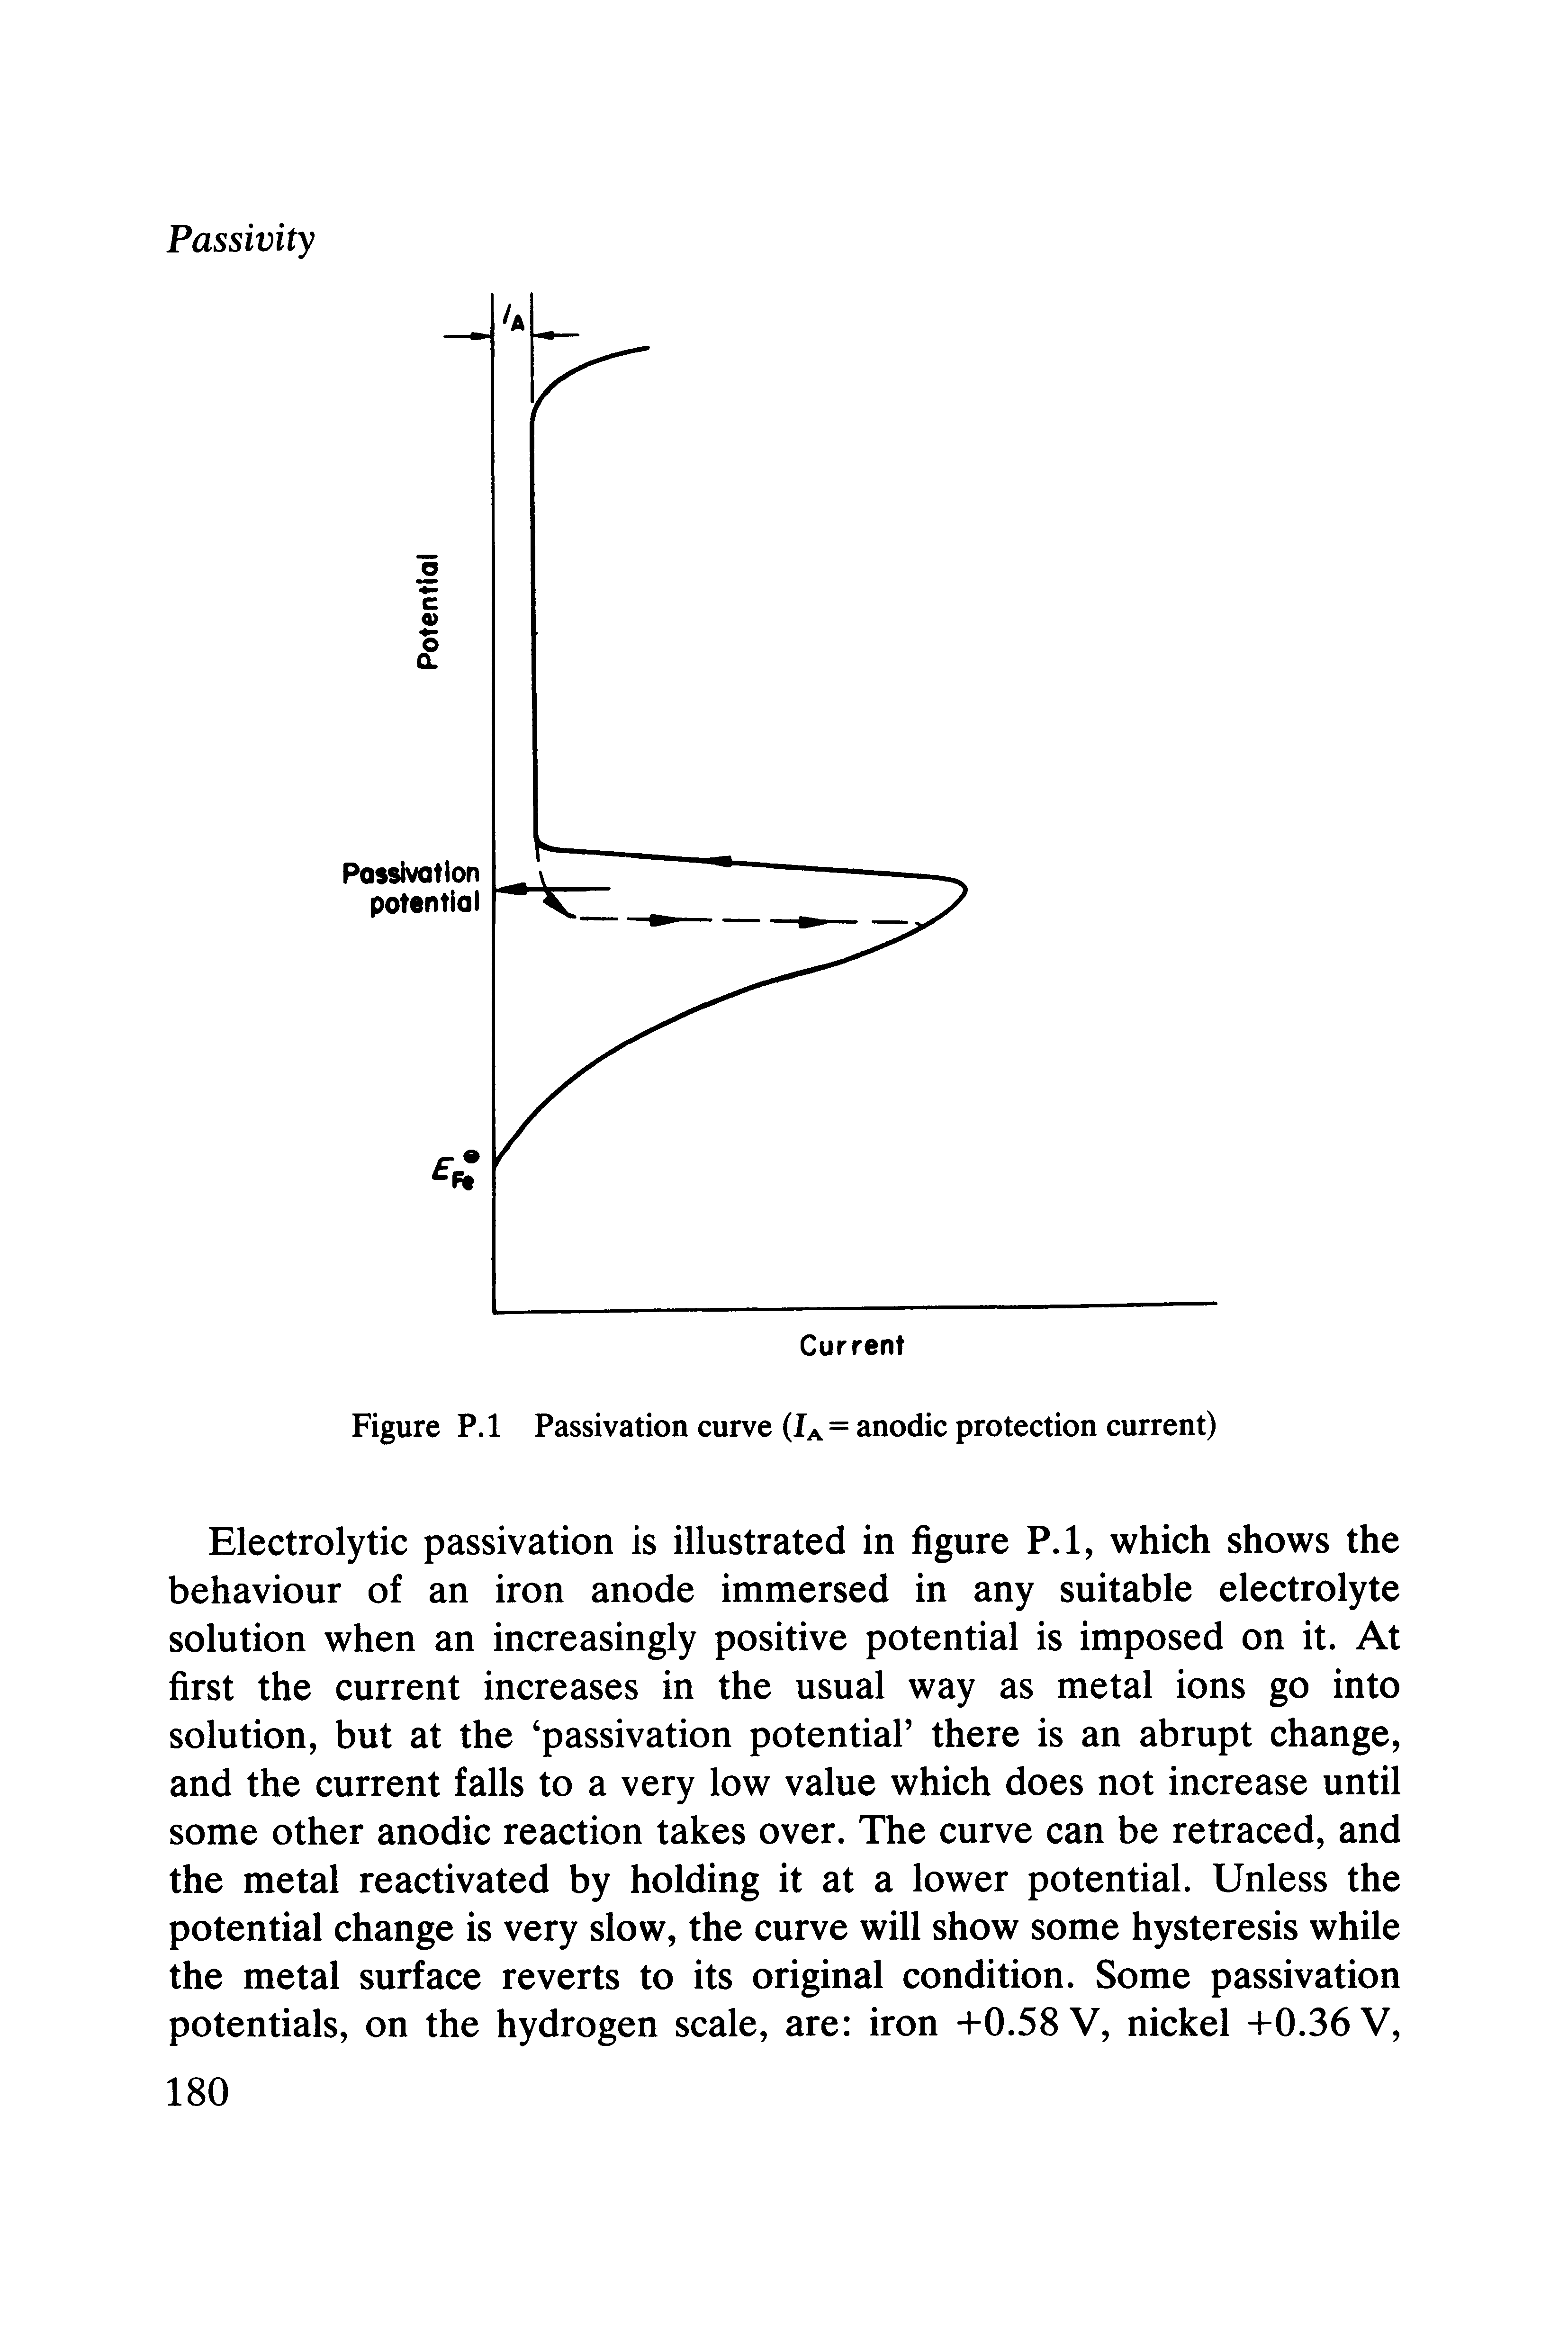 Figure P.l Passivation curve (Ia = anodic protection current)...